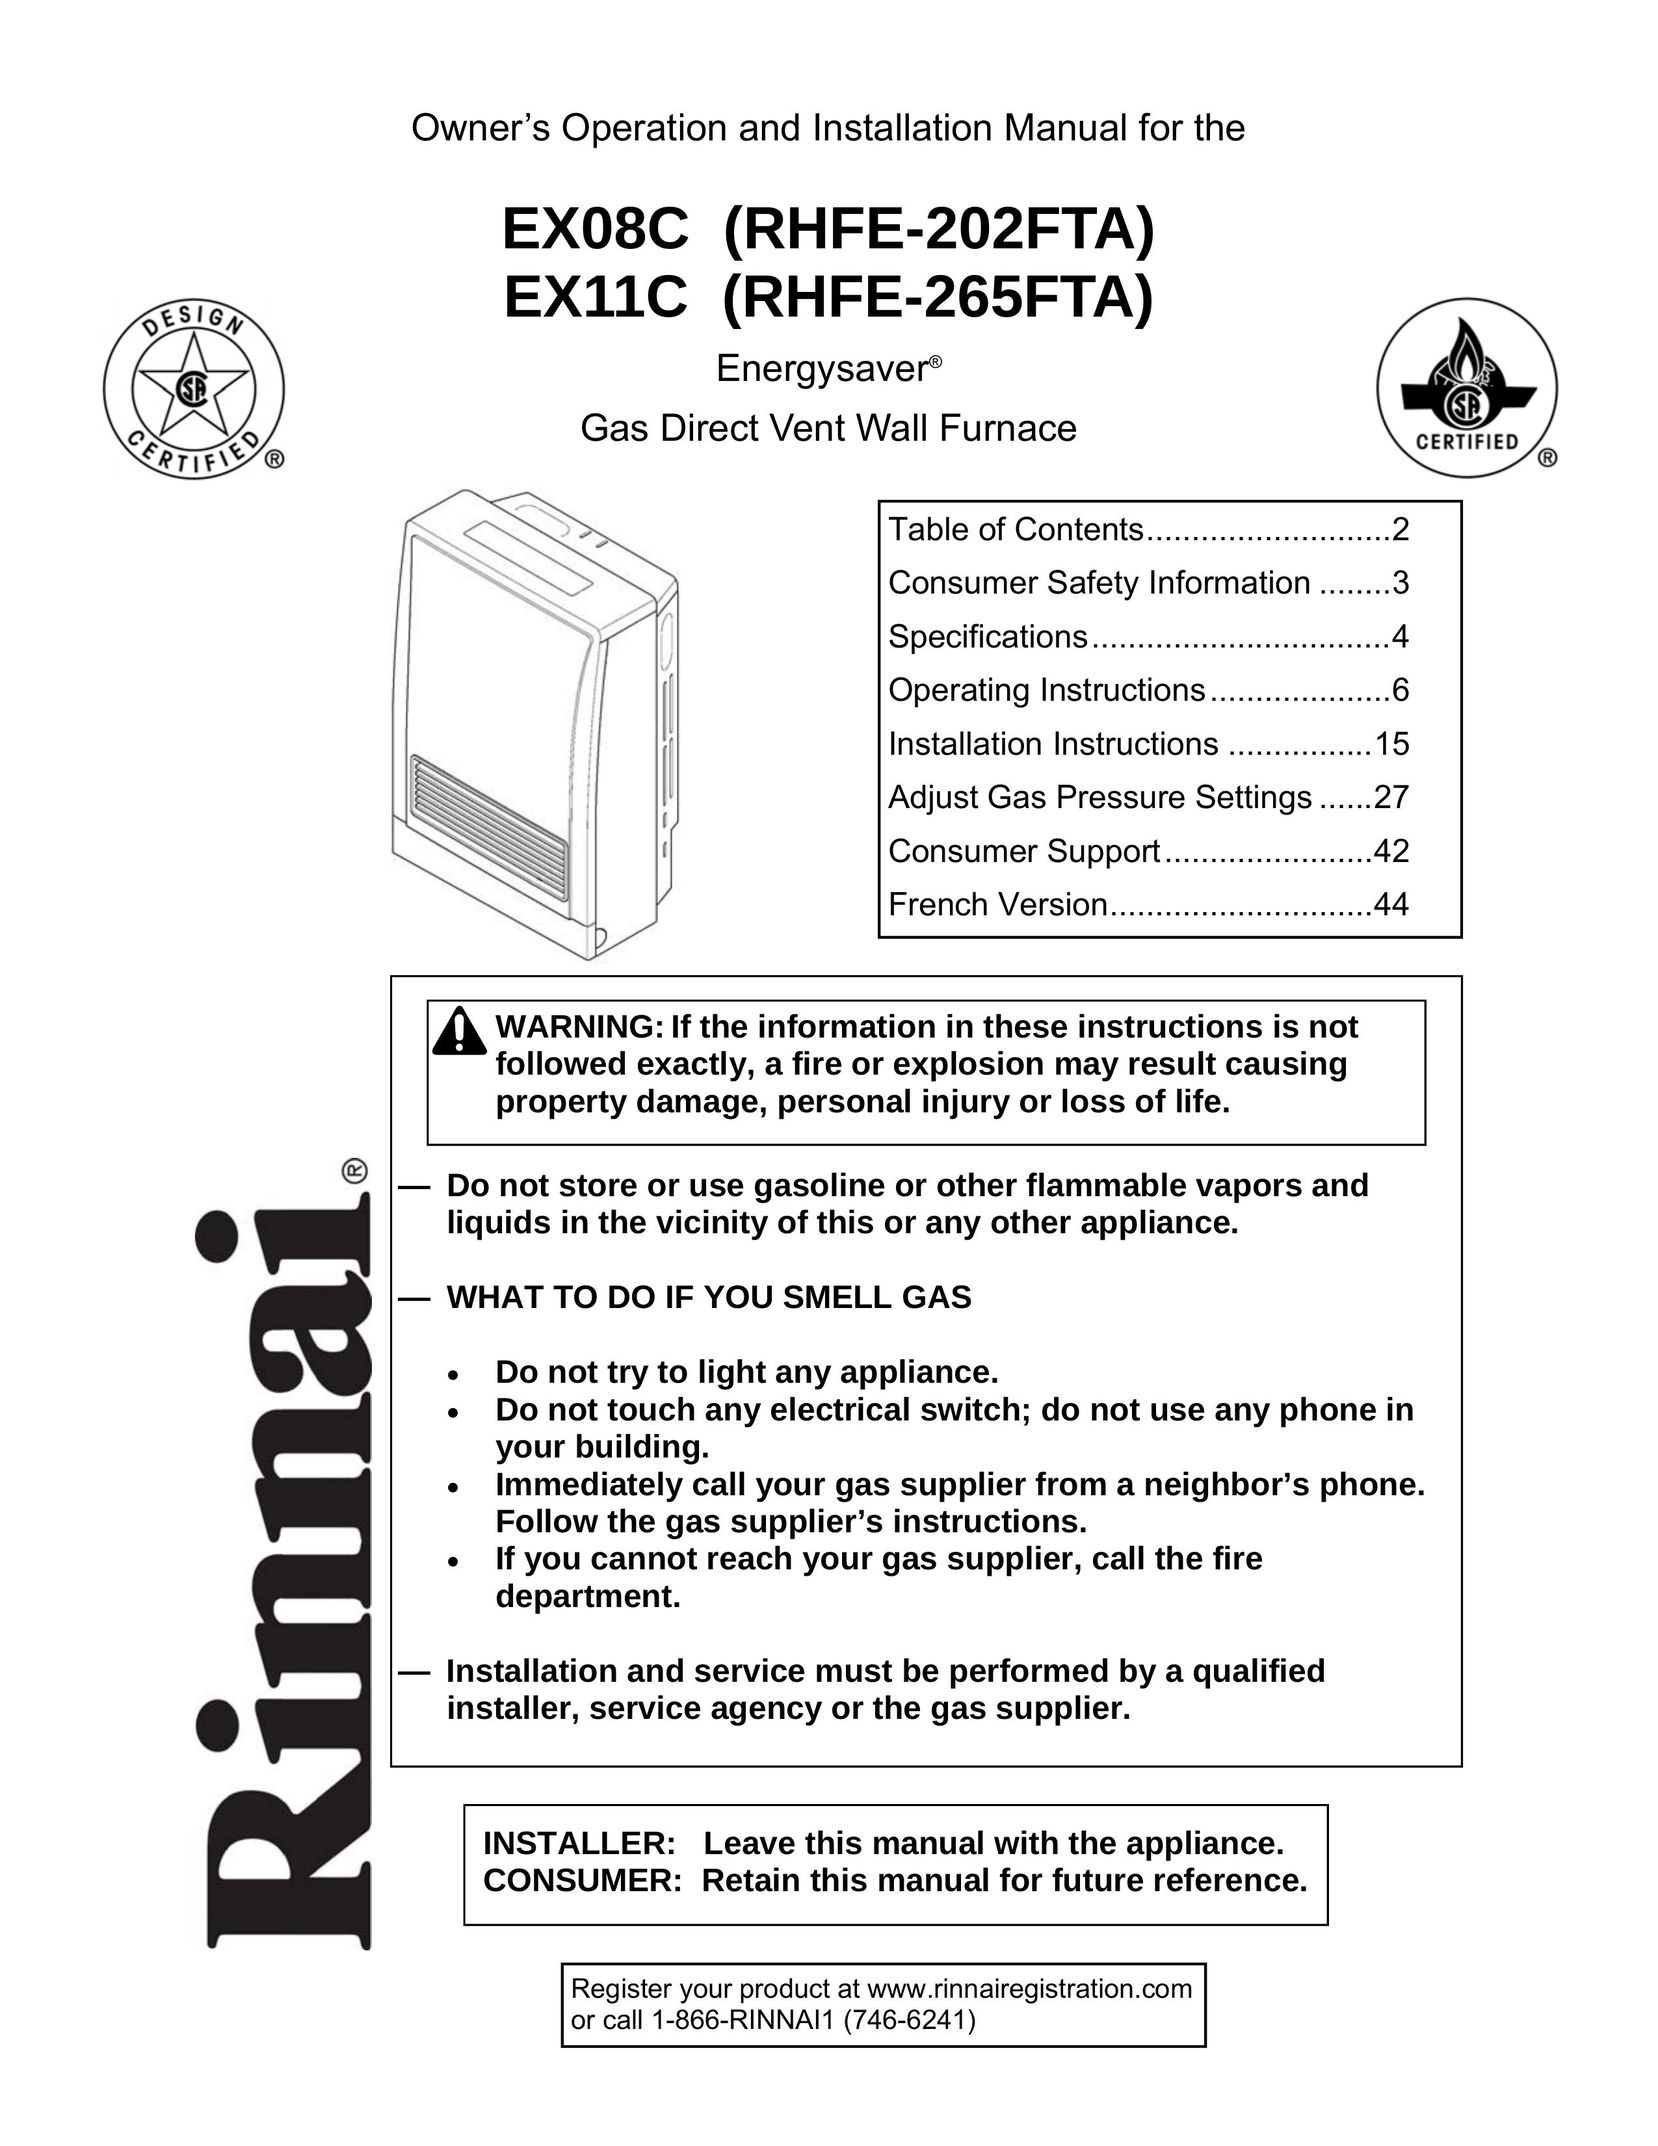 Rinnai EX11C (RHFE-265FTA) Indoor Furnishings User Manual